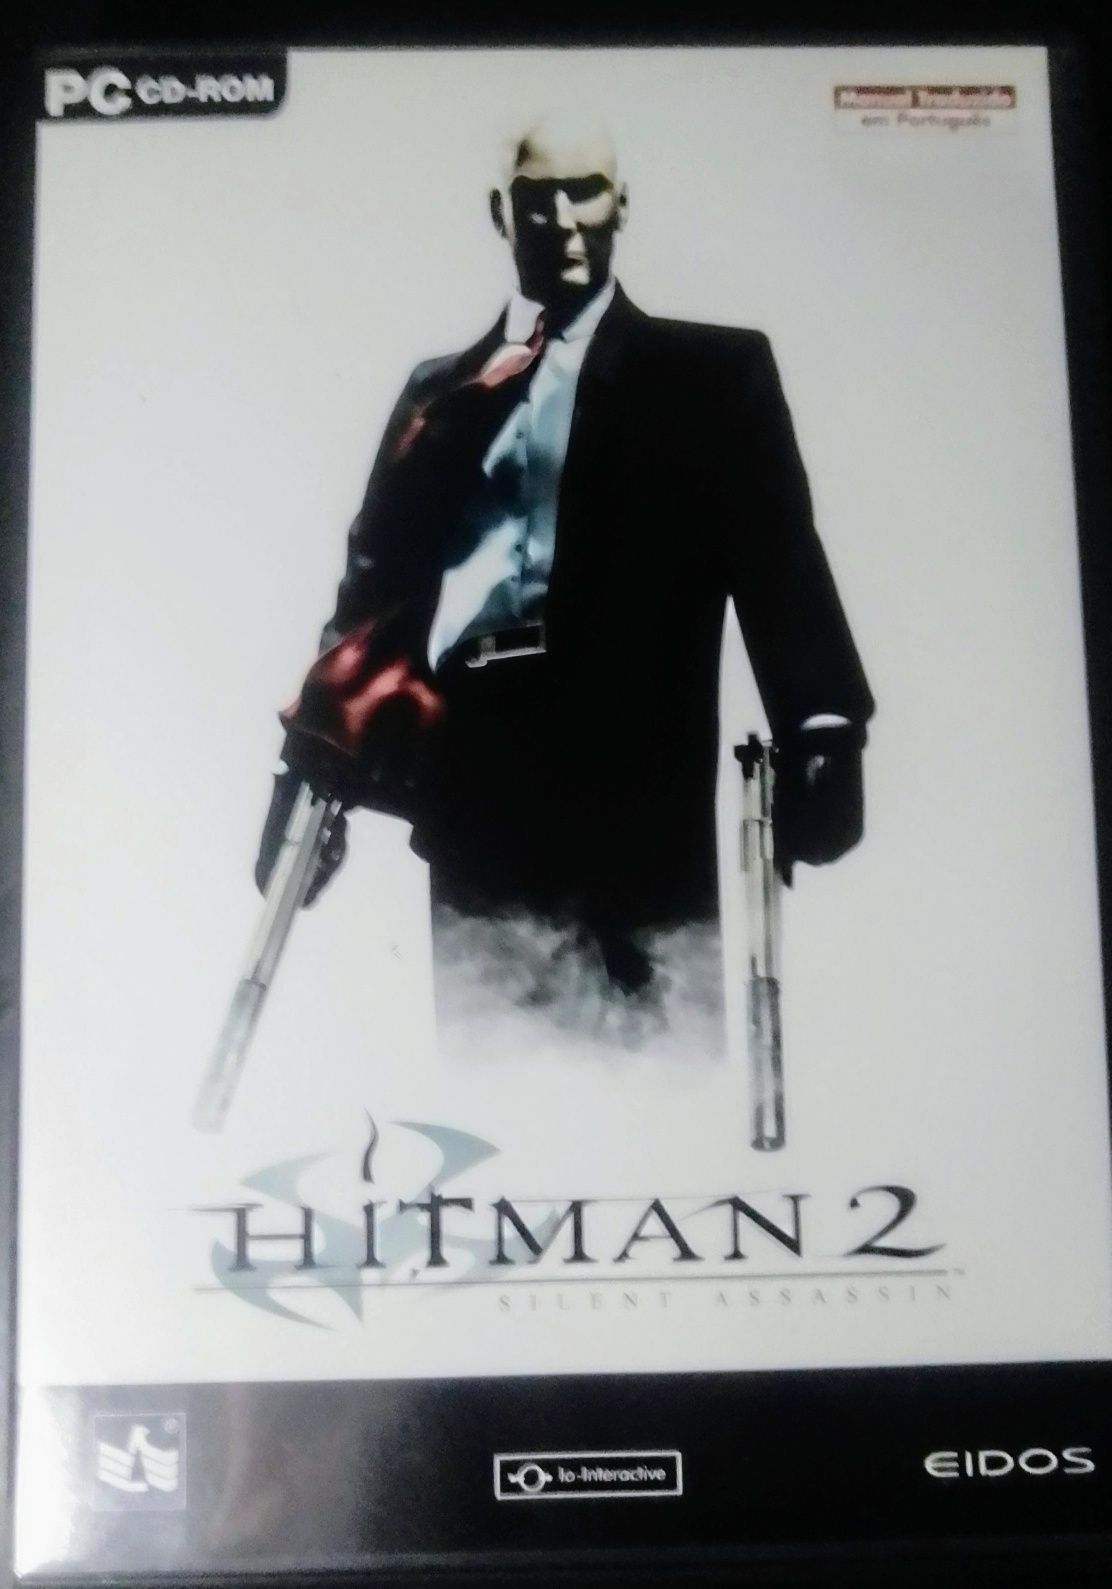 Jogo PC CD-ROM Hitman 2 Silent Assassin ano 2002